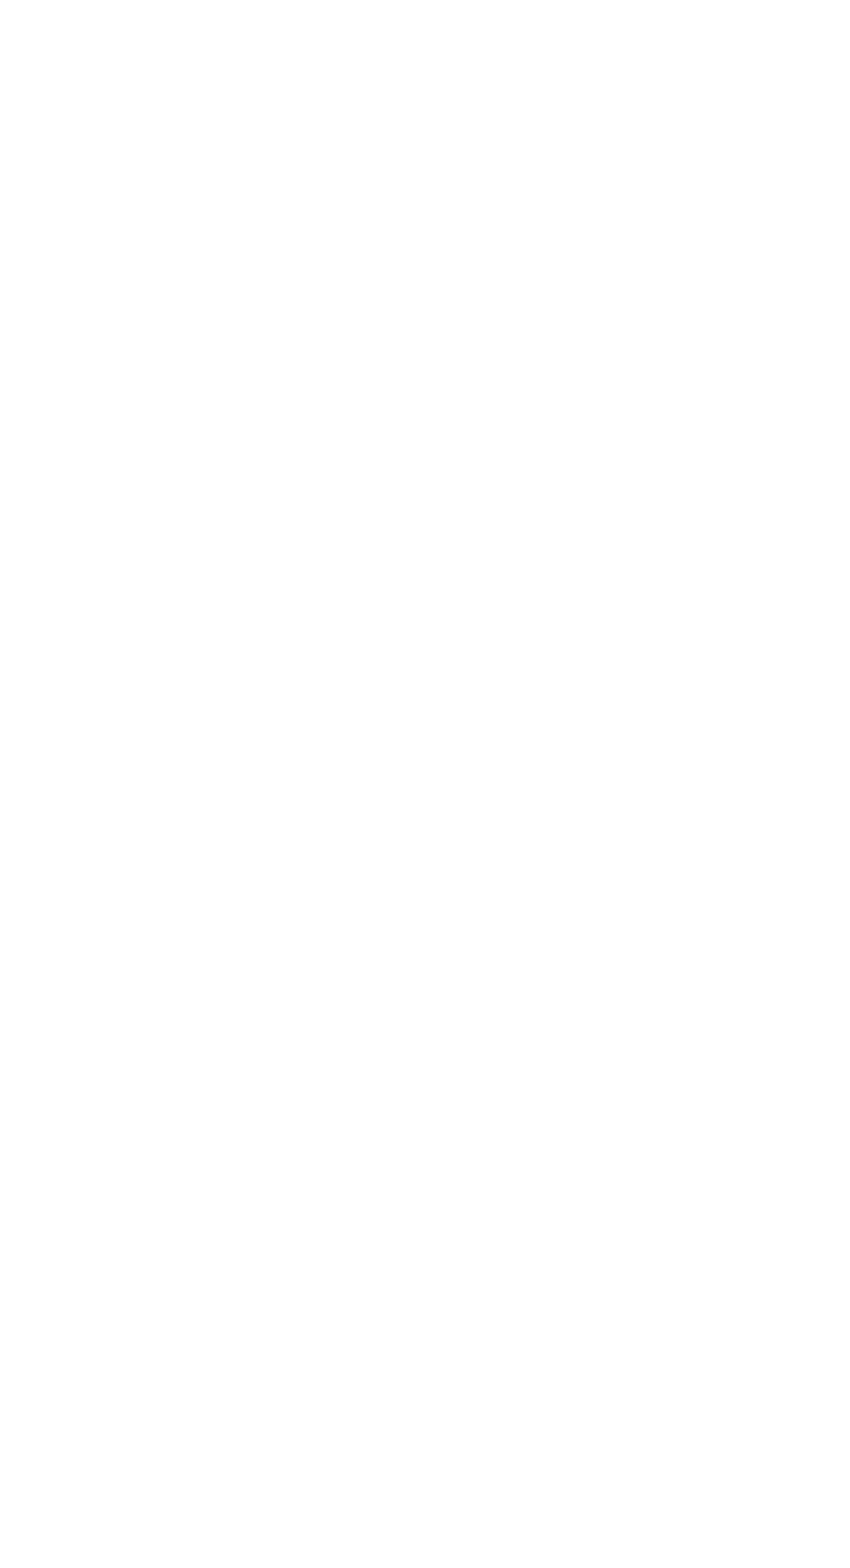 Wine Spectator Best of 2024